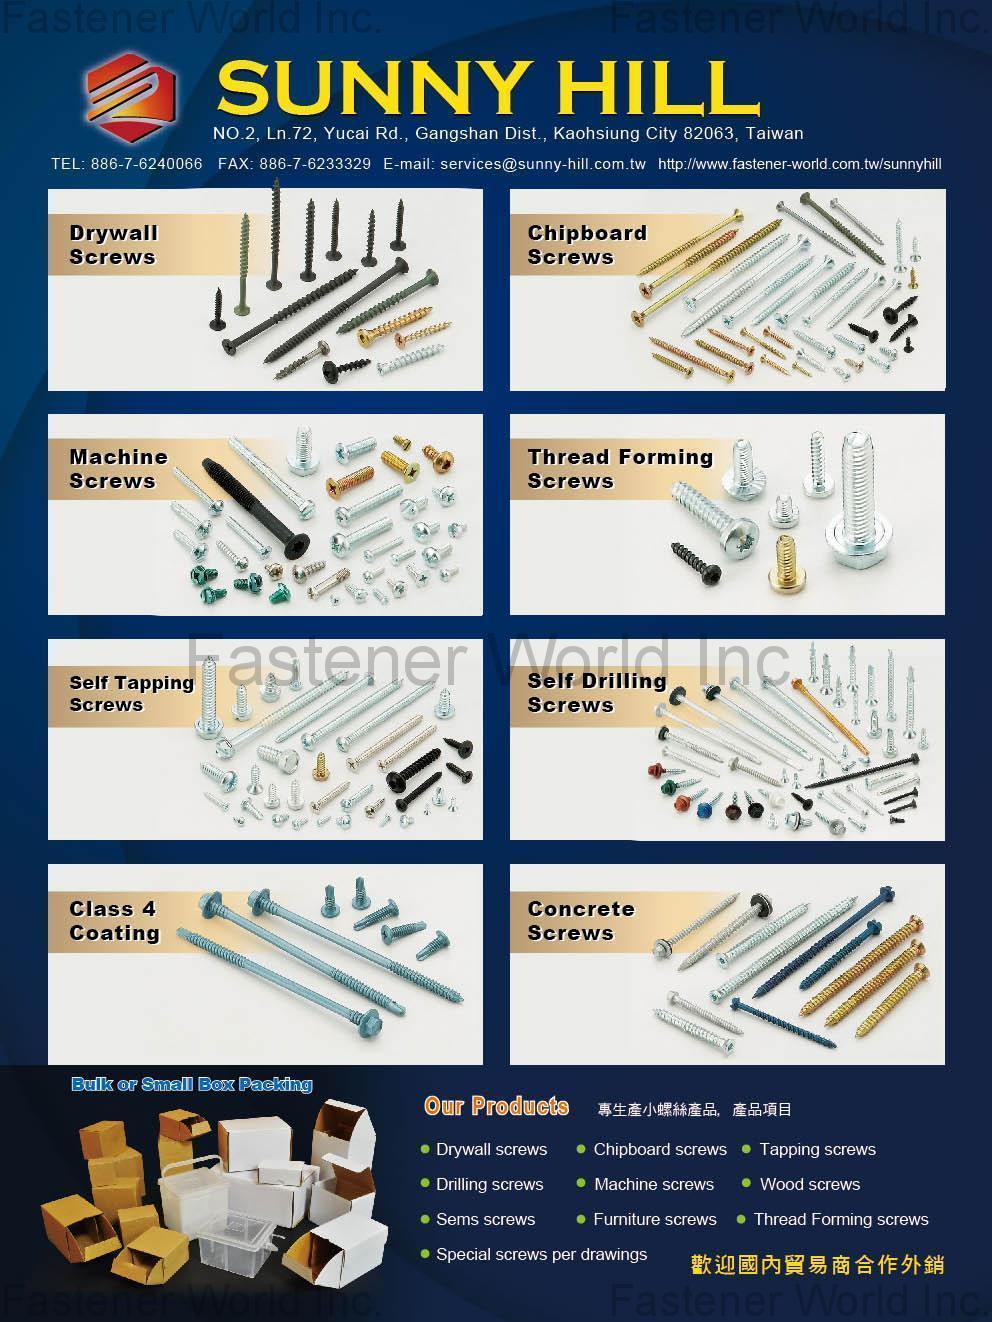 SUNNY HILL INDUSTRY CO., LTD. , Drywall Screws, Chipboard Screws, Tapping Screws, Drilling Screws, Machine Screws, Wood Screws, Sems Screws, Furniture Screws, Thread Forming Screws, Special Screws per drawings , Drywall Screws